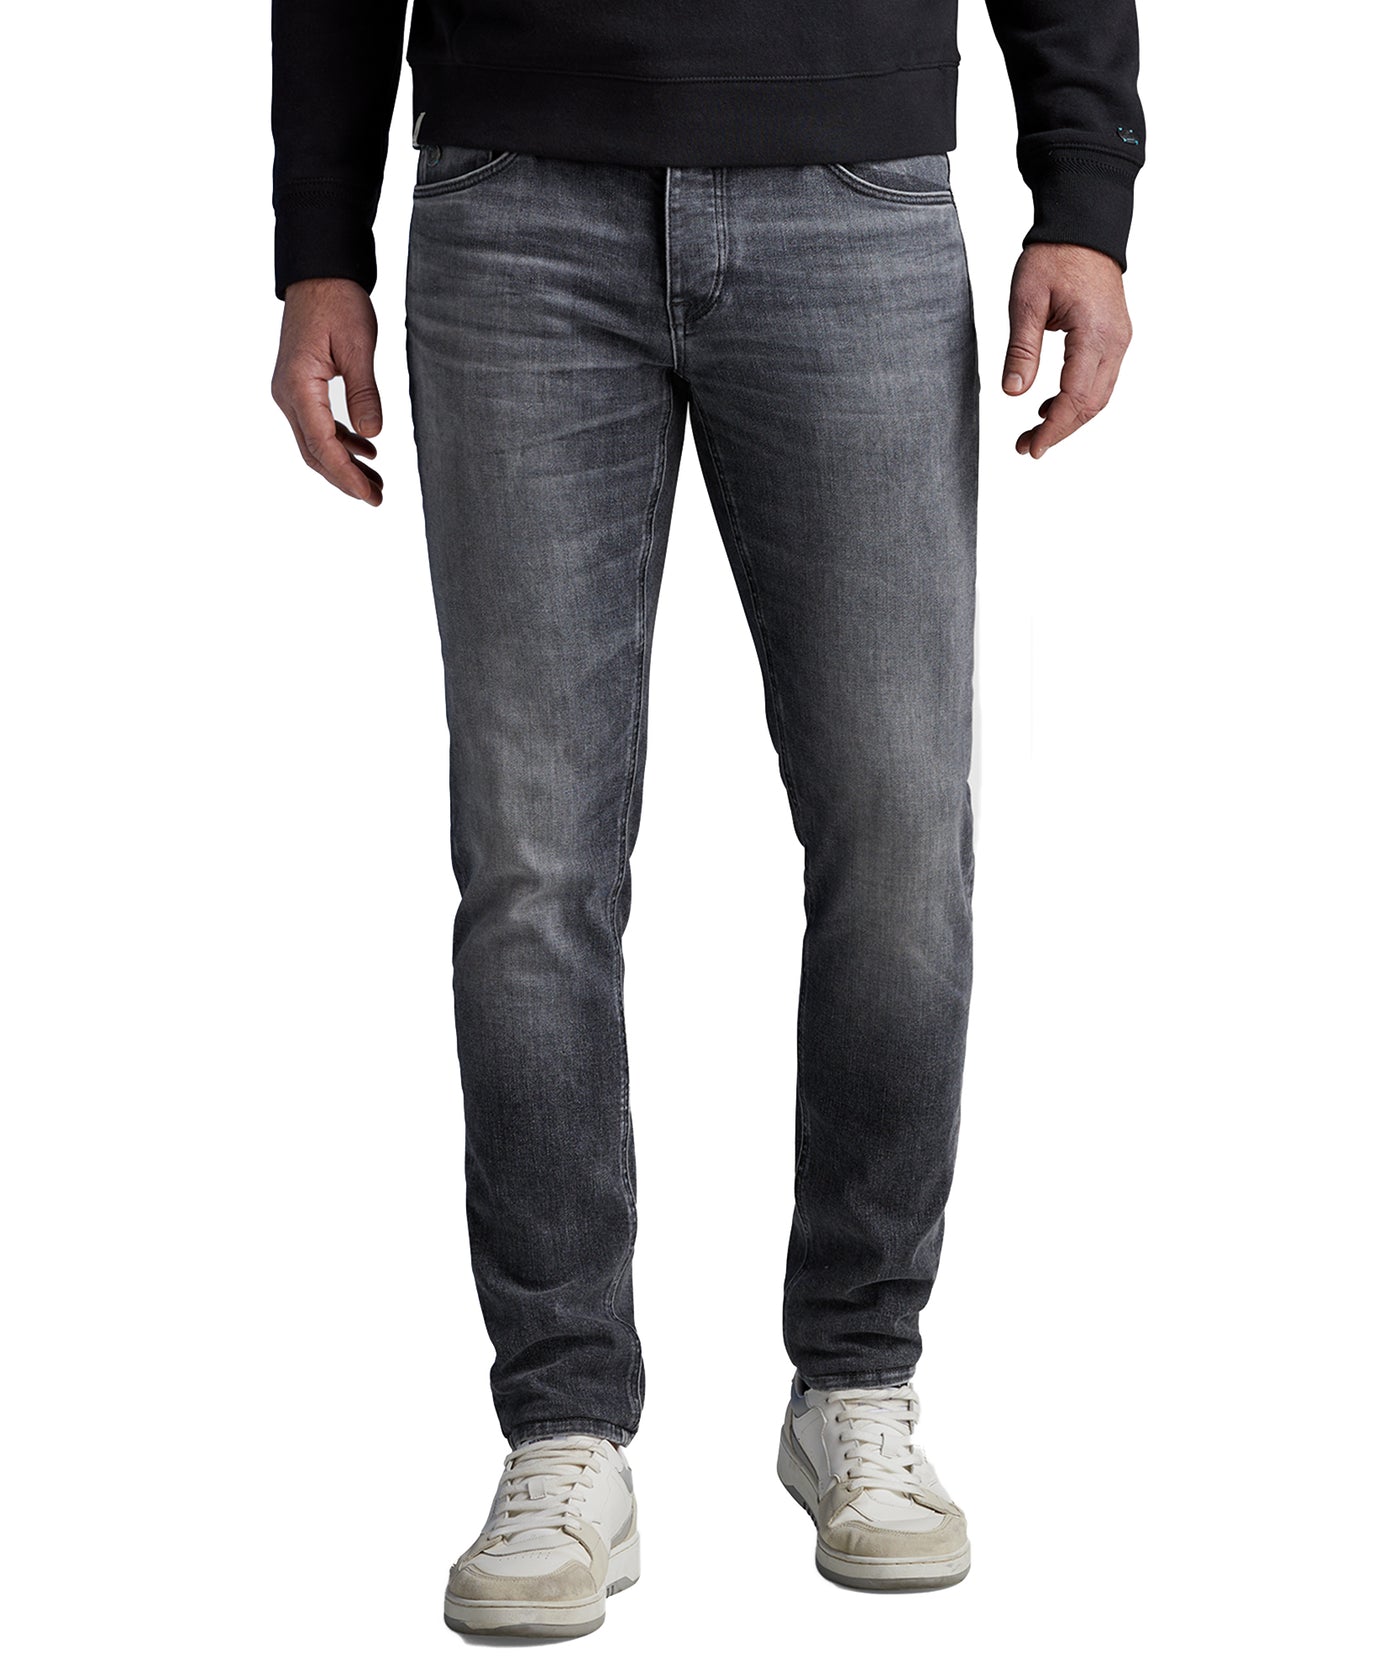 Cast Iron - Ctr390-gsj - Riser Slim Stone Jeans